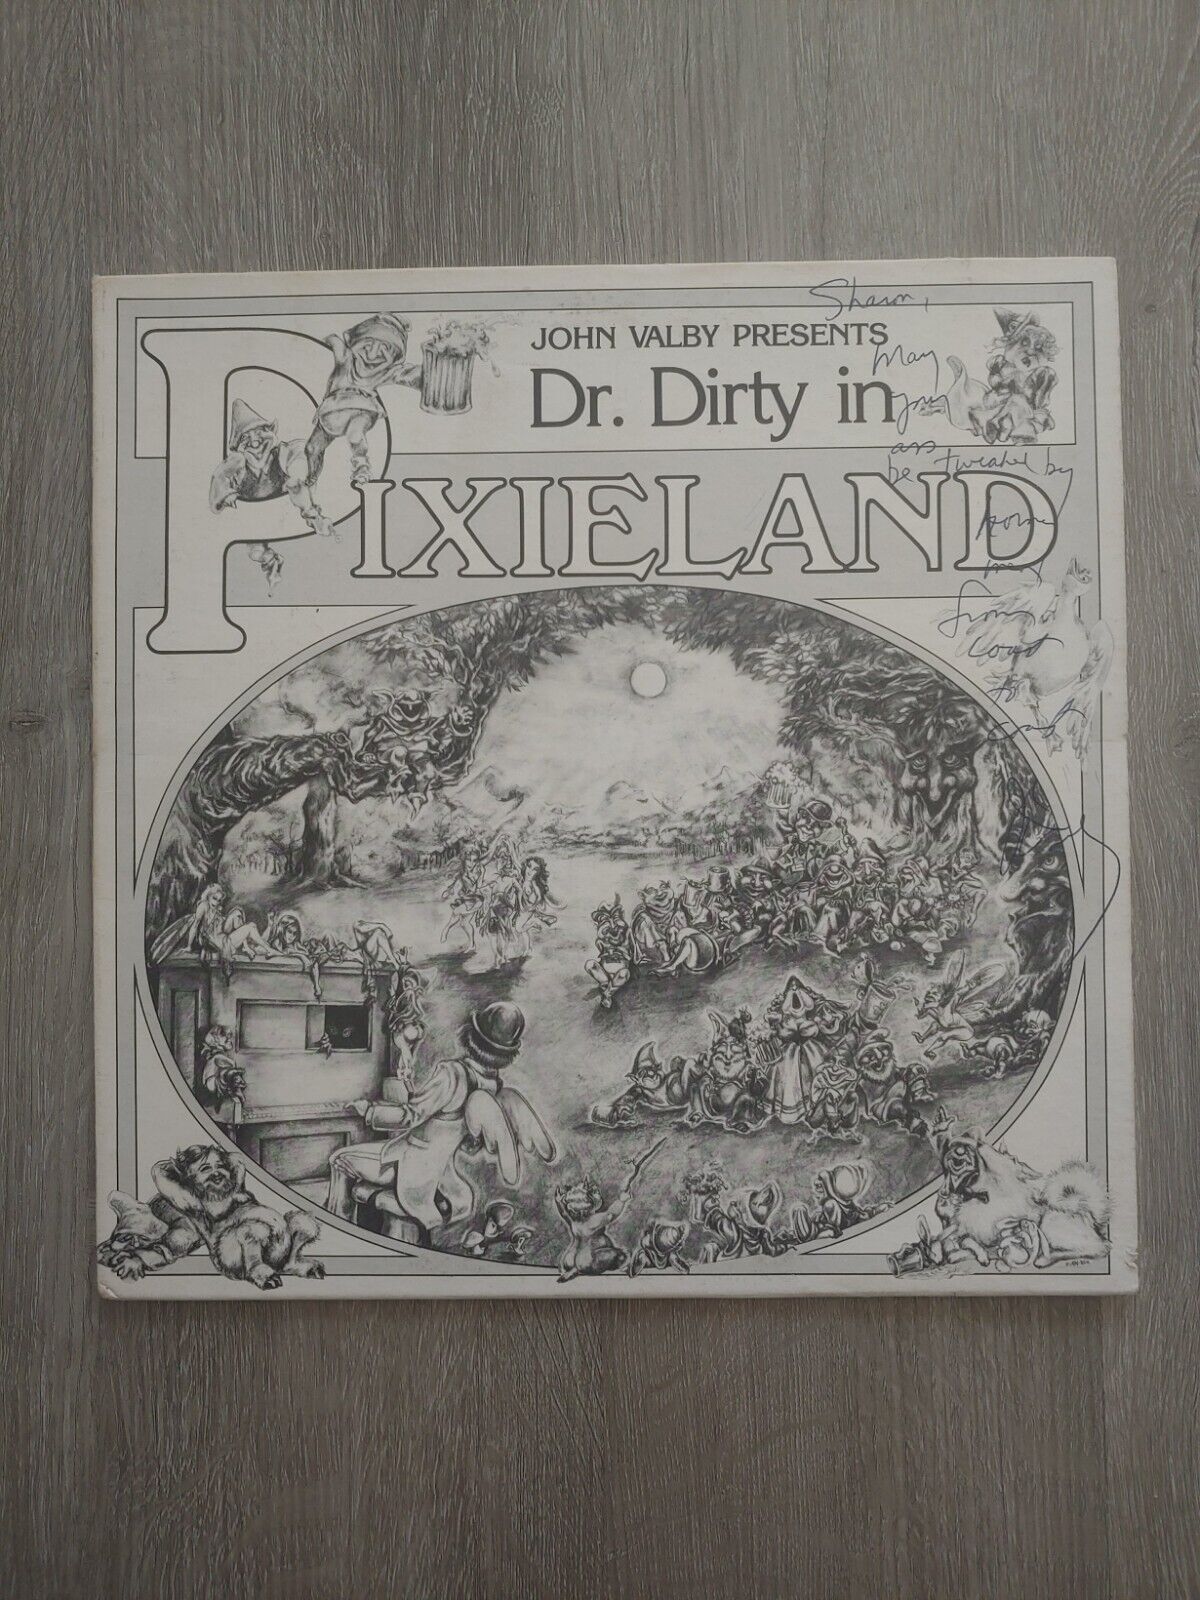 Dr Dirty Valby Dr. Dirty Pixieland -LP Vinyl 33 RPM Artist Signed 1982 | eBay